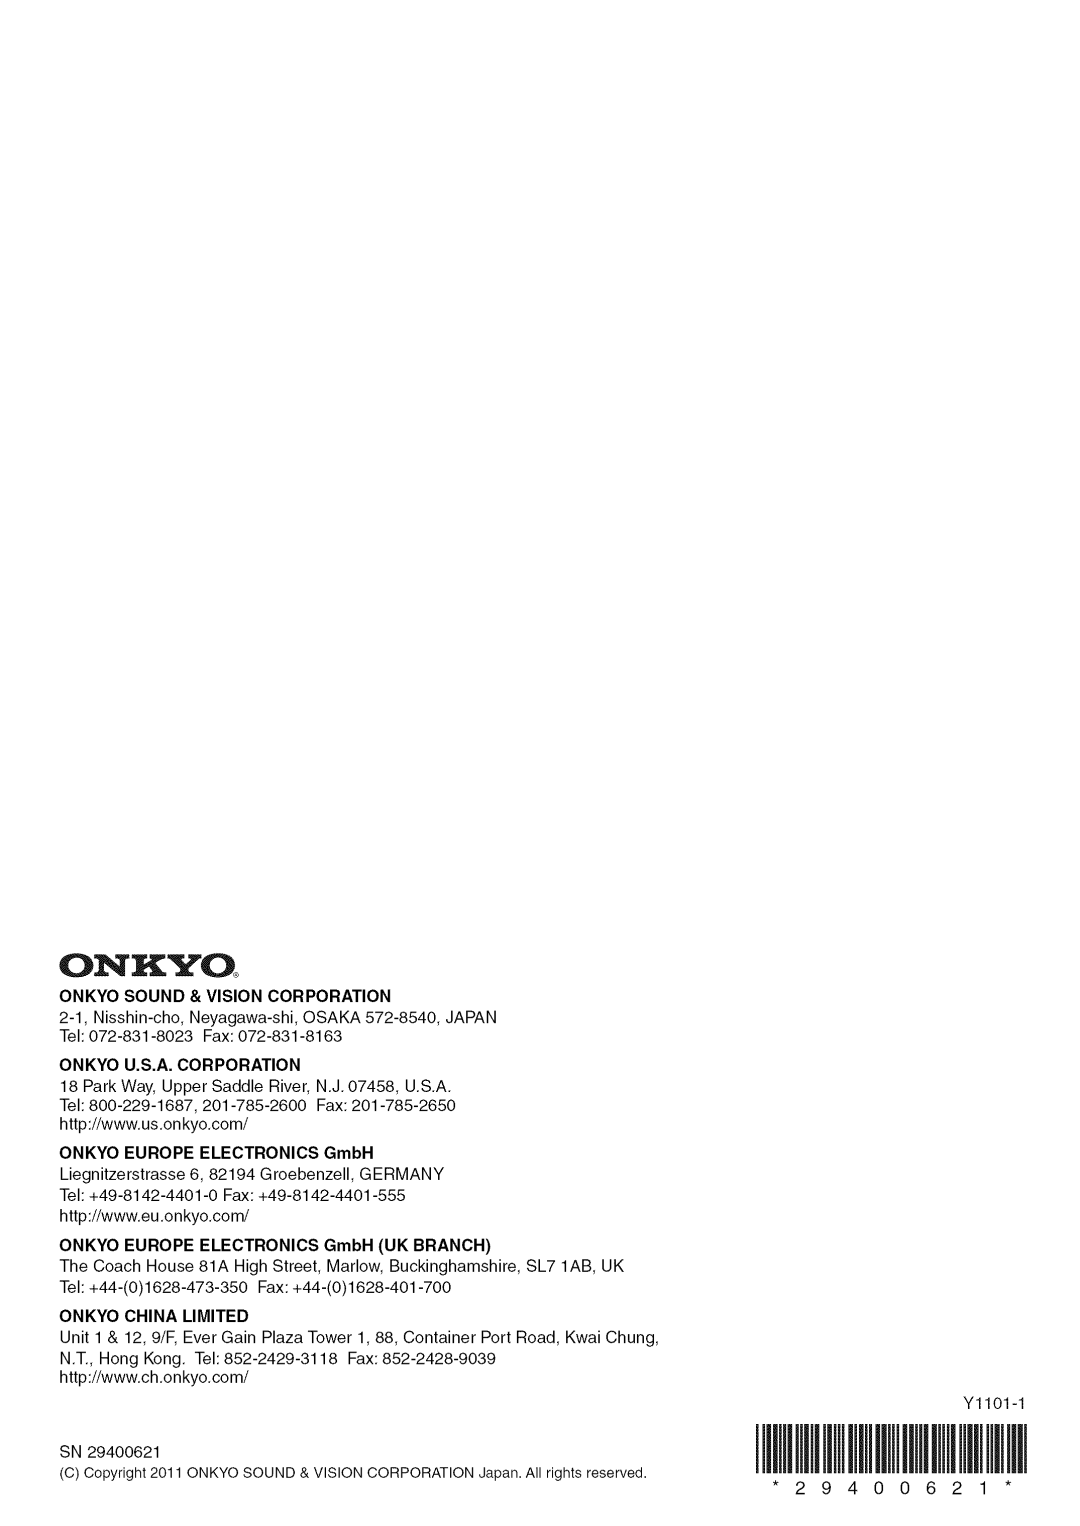 Onkyo HT-R590 Onkyo Sound & Vision Corporation, Tel: 072-831-8023Fax: ONKYO U.S.A. CORPORATION, Onkyo China Limited 